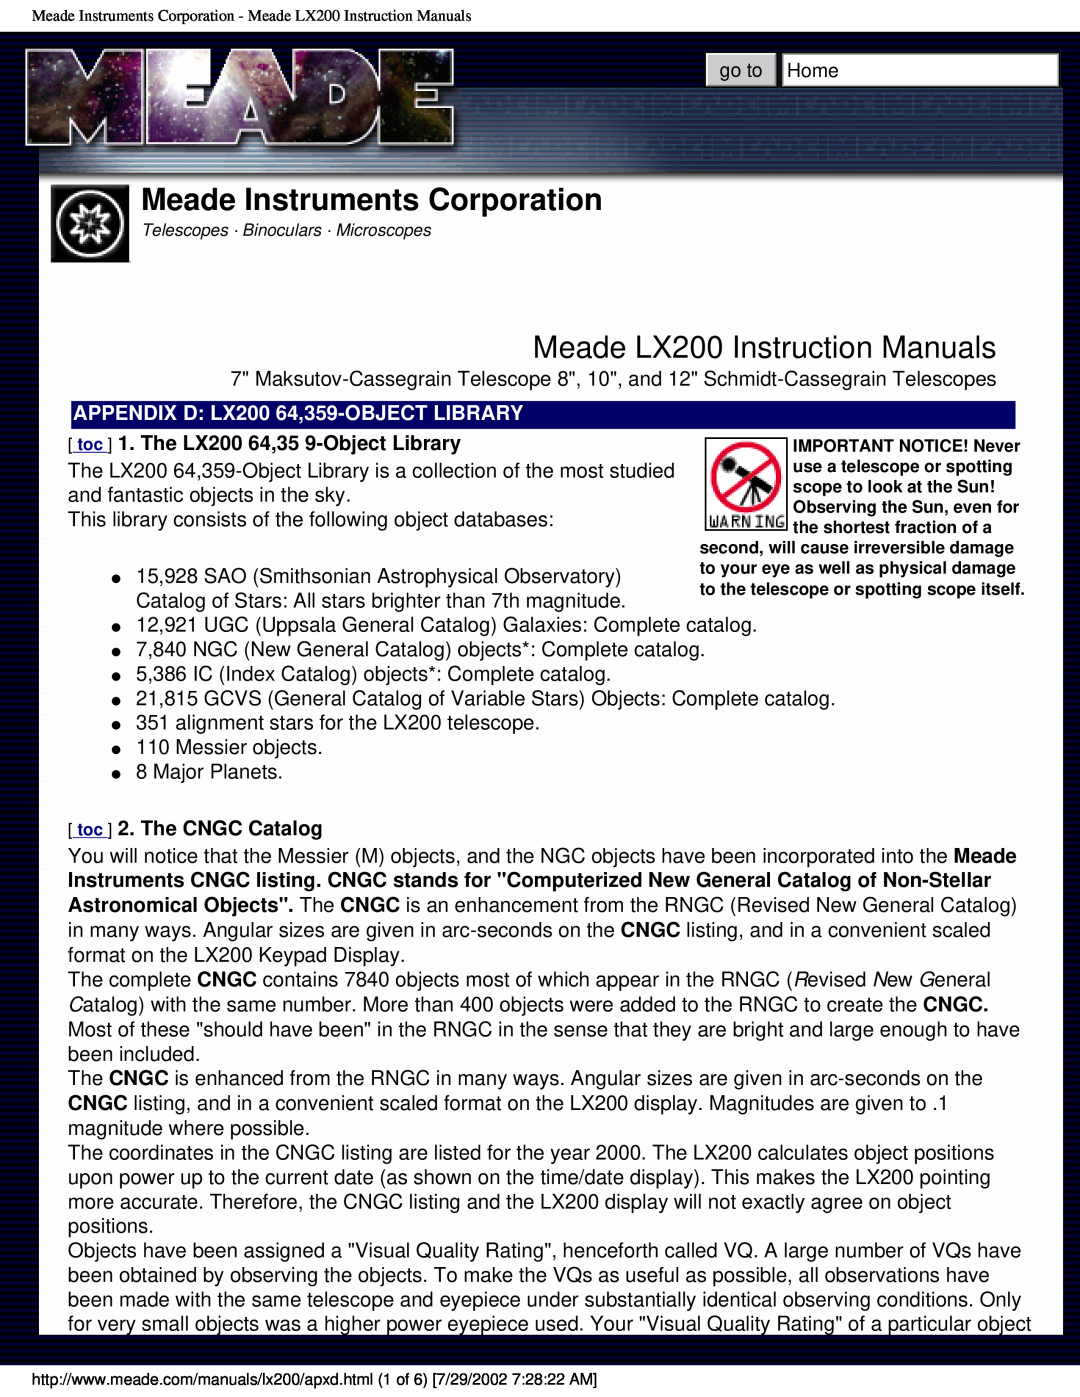 Meade instruction manual Meade Instruments Corporation, Meade LX200 Instruction Manuals, toc 2. The CNGC Catalog 